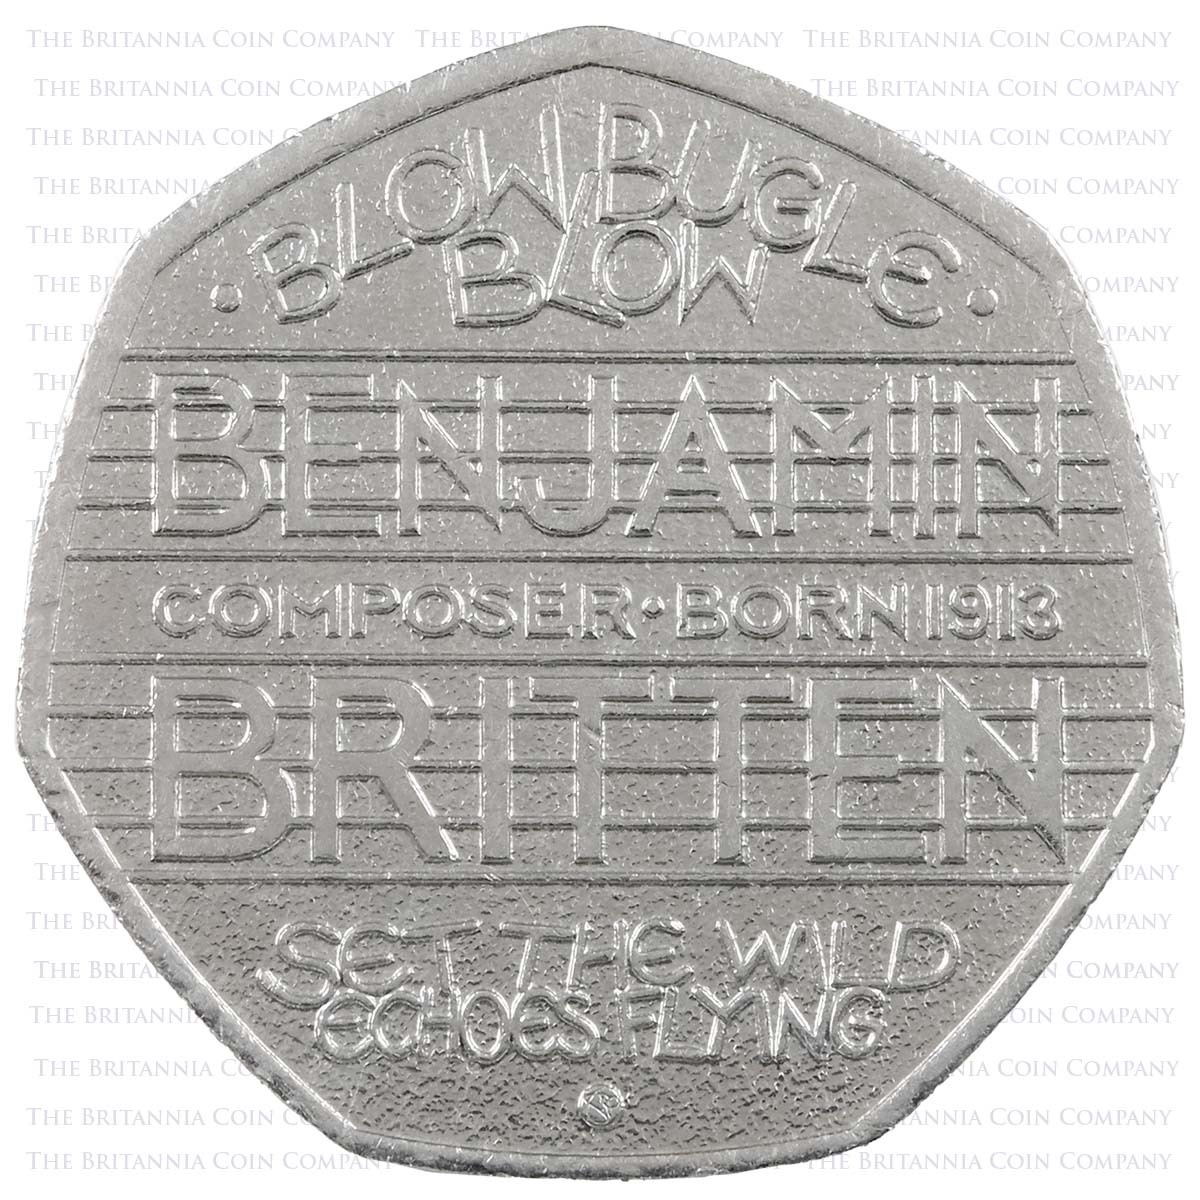 2013 Benjamin Britten Circulated Fifty Pence Coin Reverse